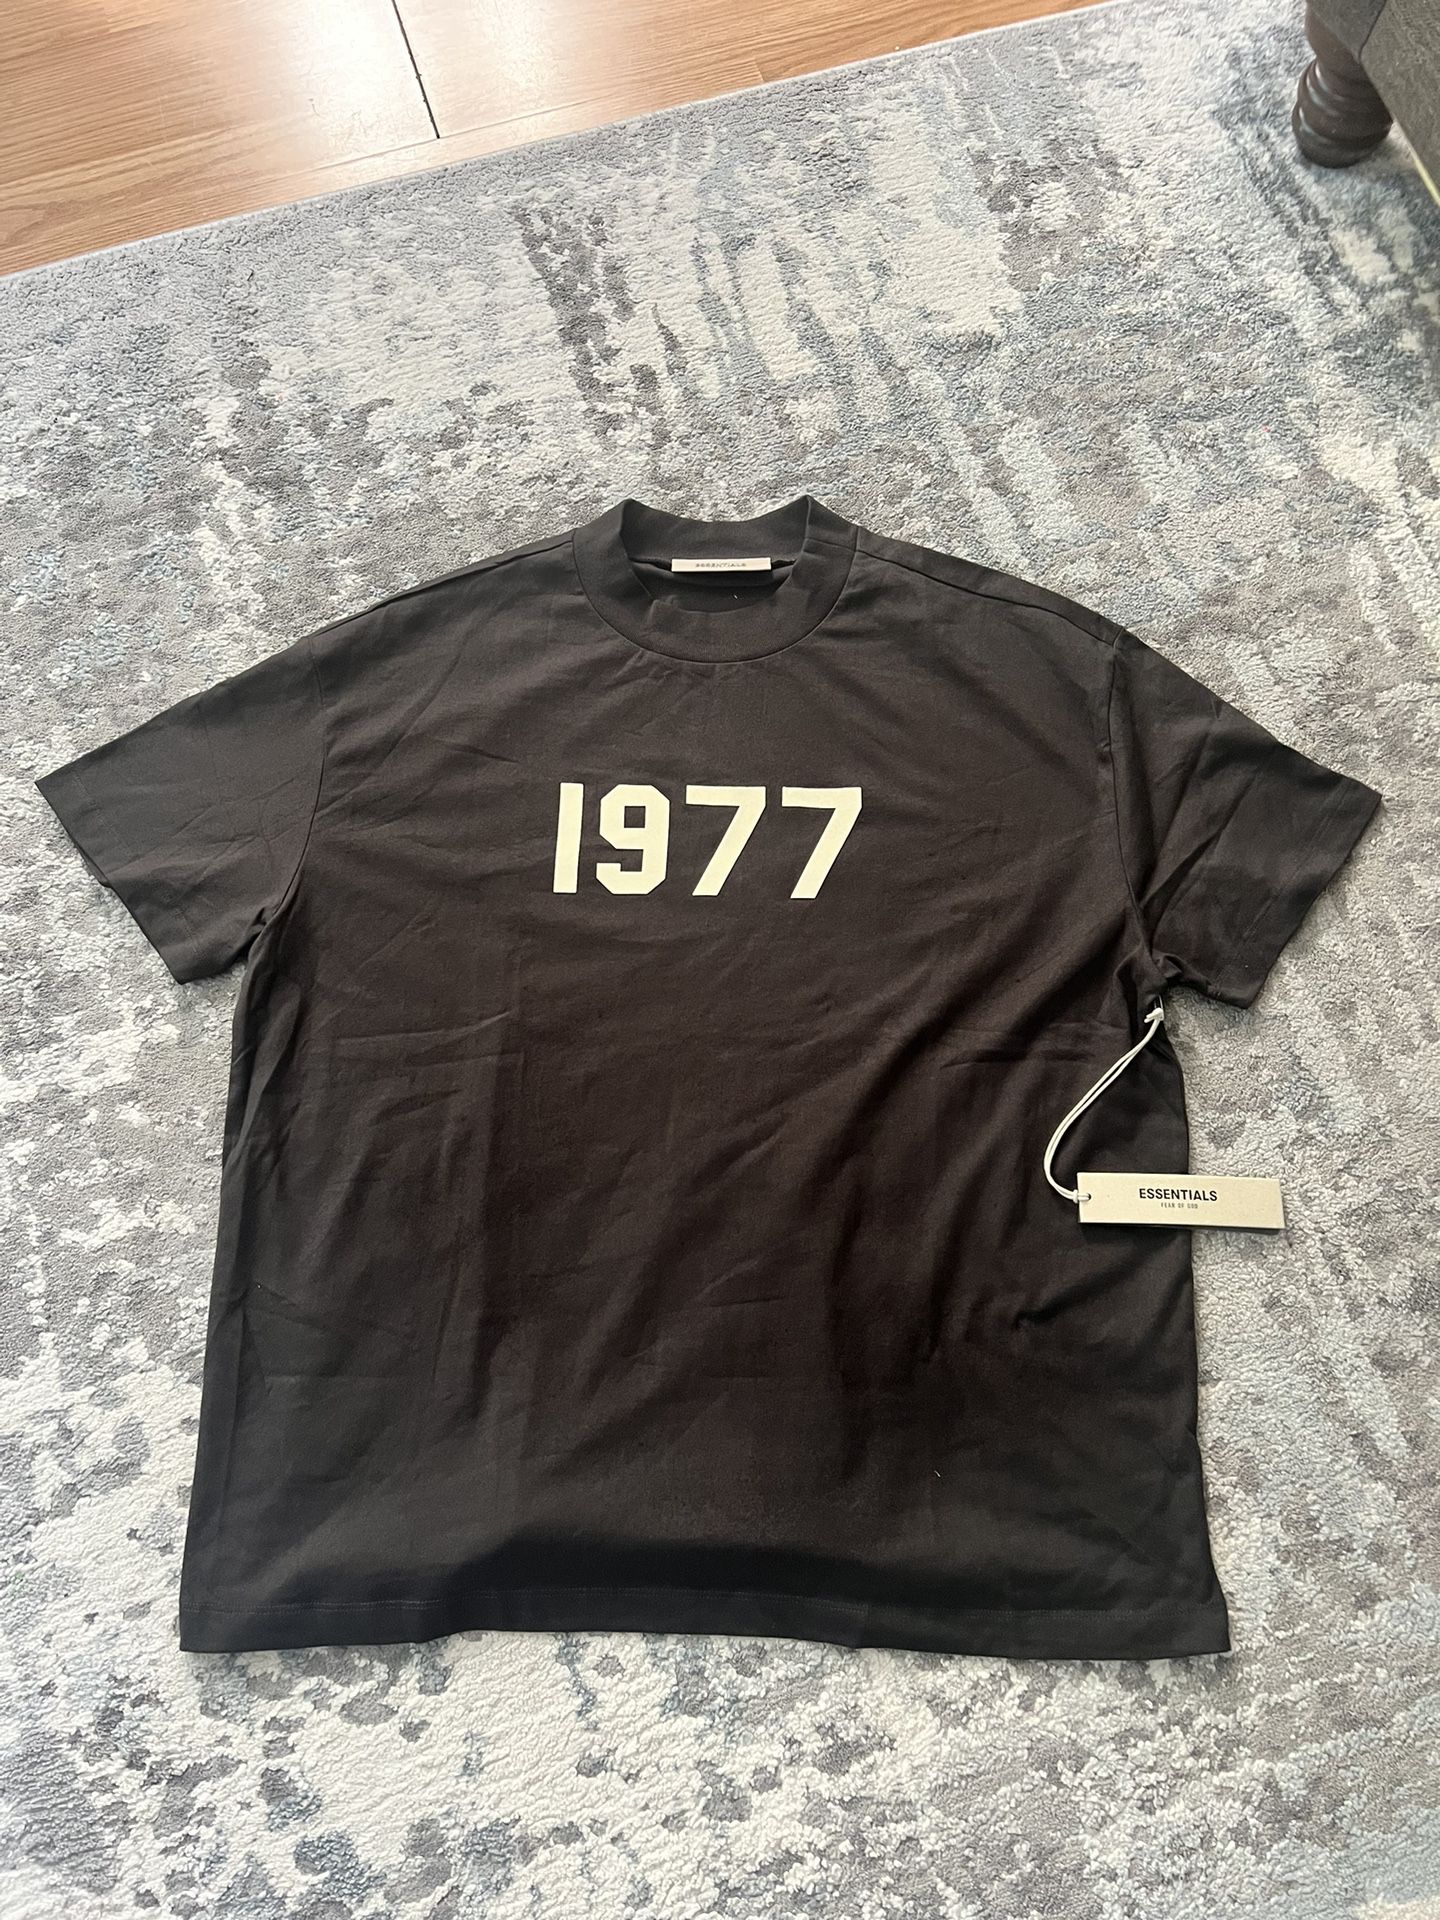 essentials t shirt 1977